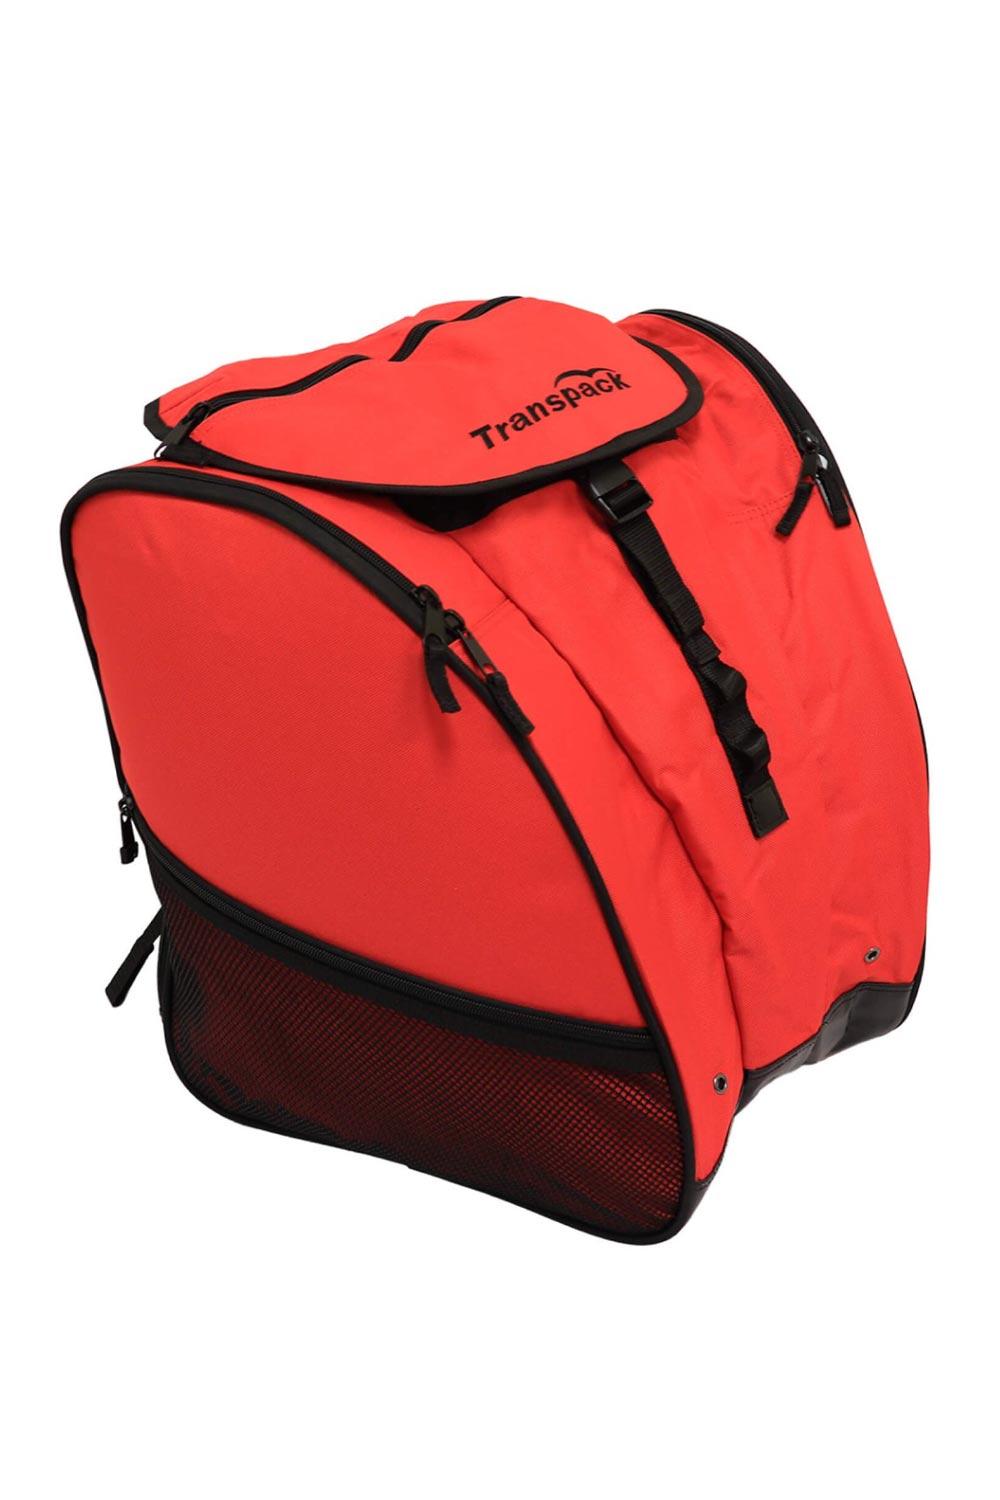 ski boot & gear backpack bag, red